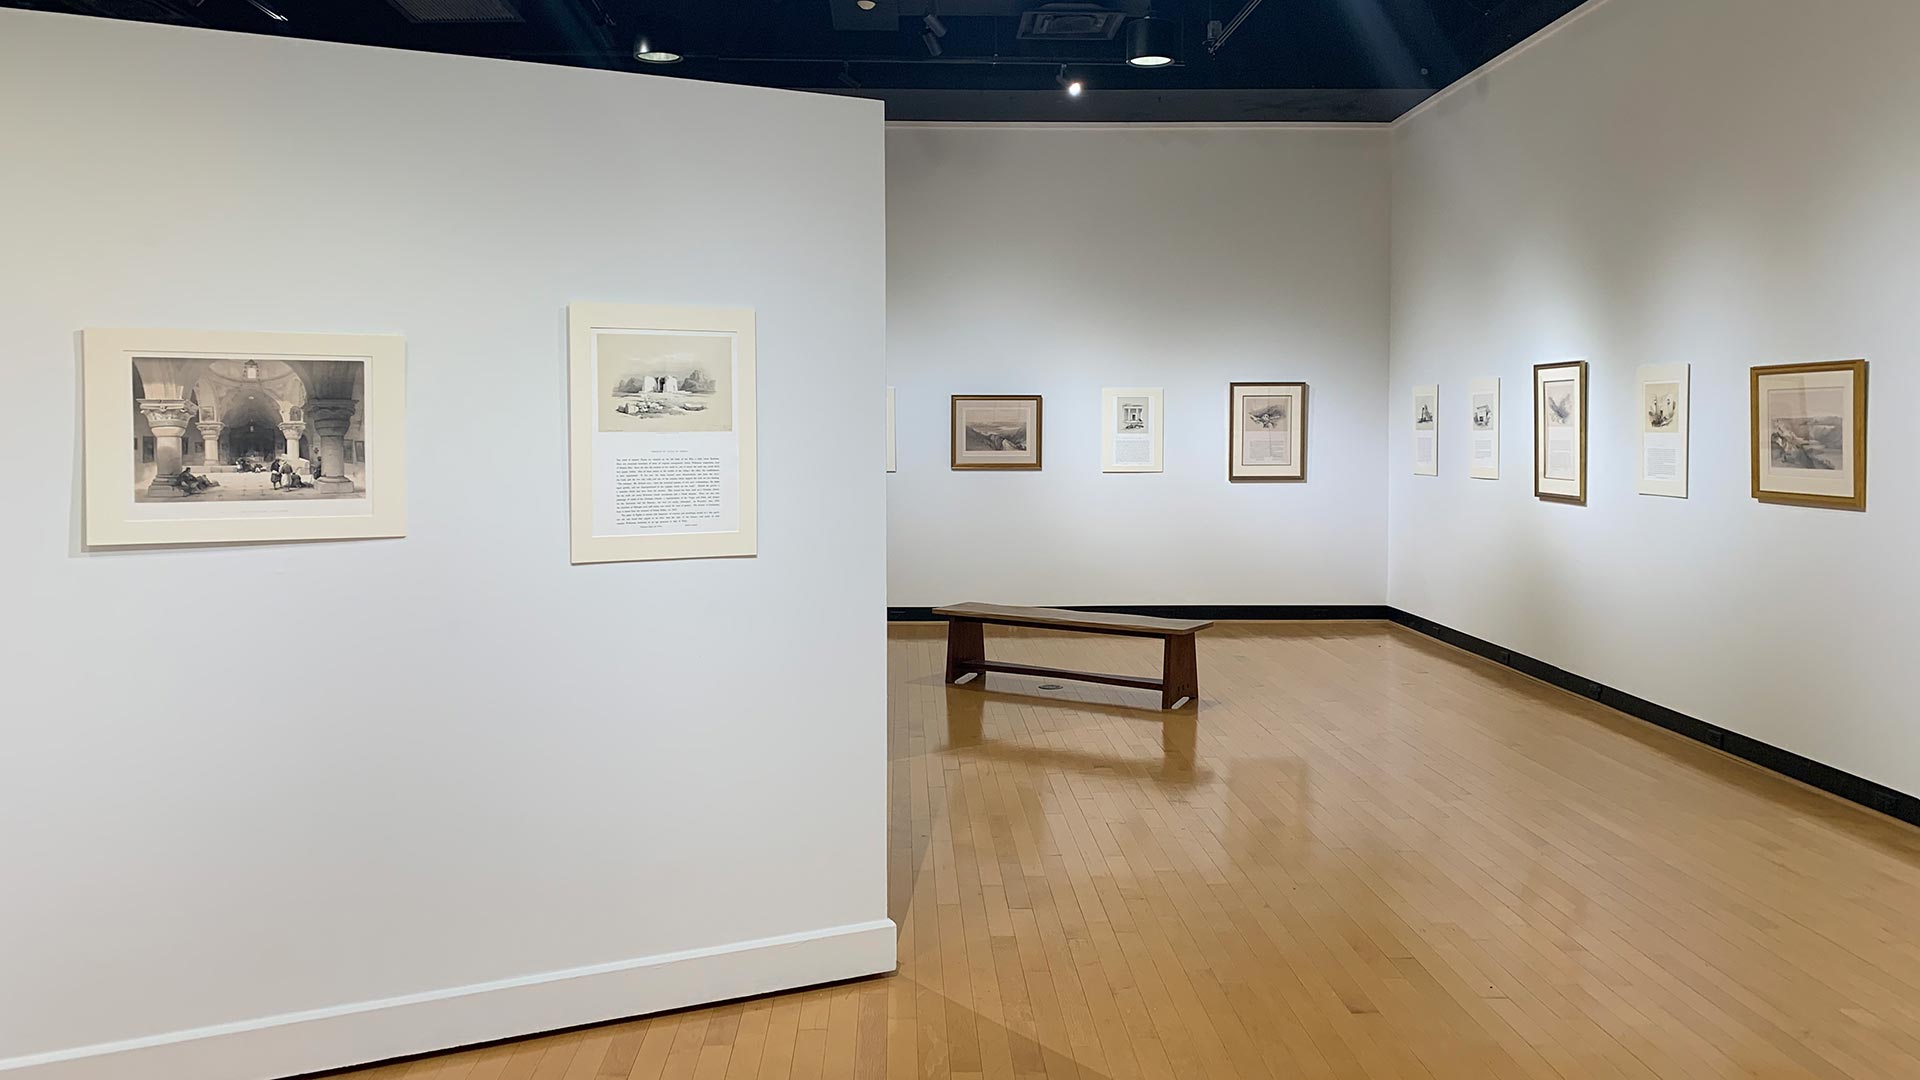 Interior gallery view of David Roberts exhibit at Houghton University.